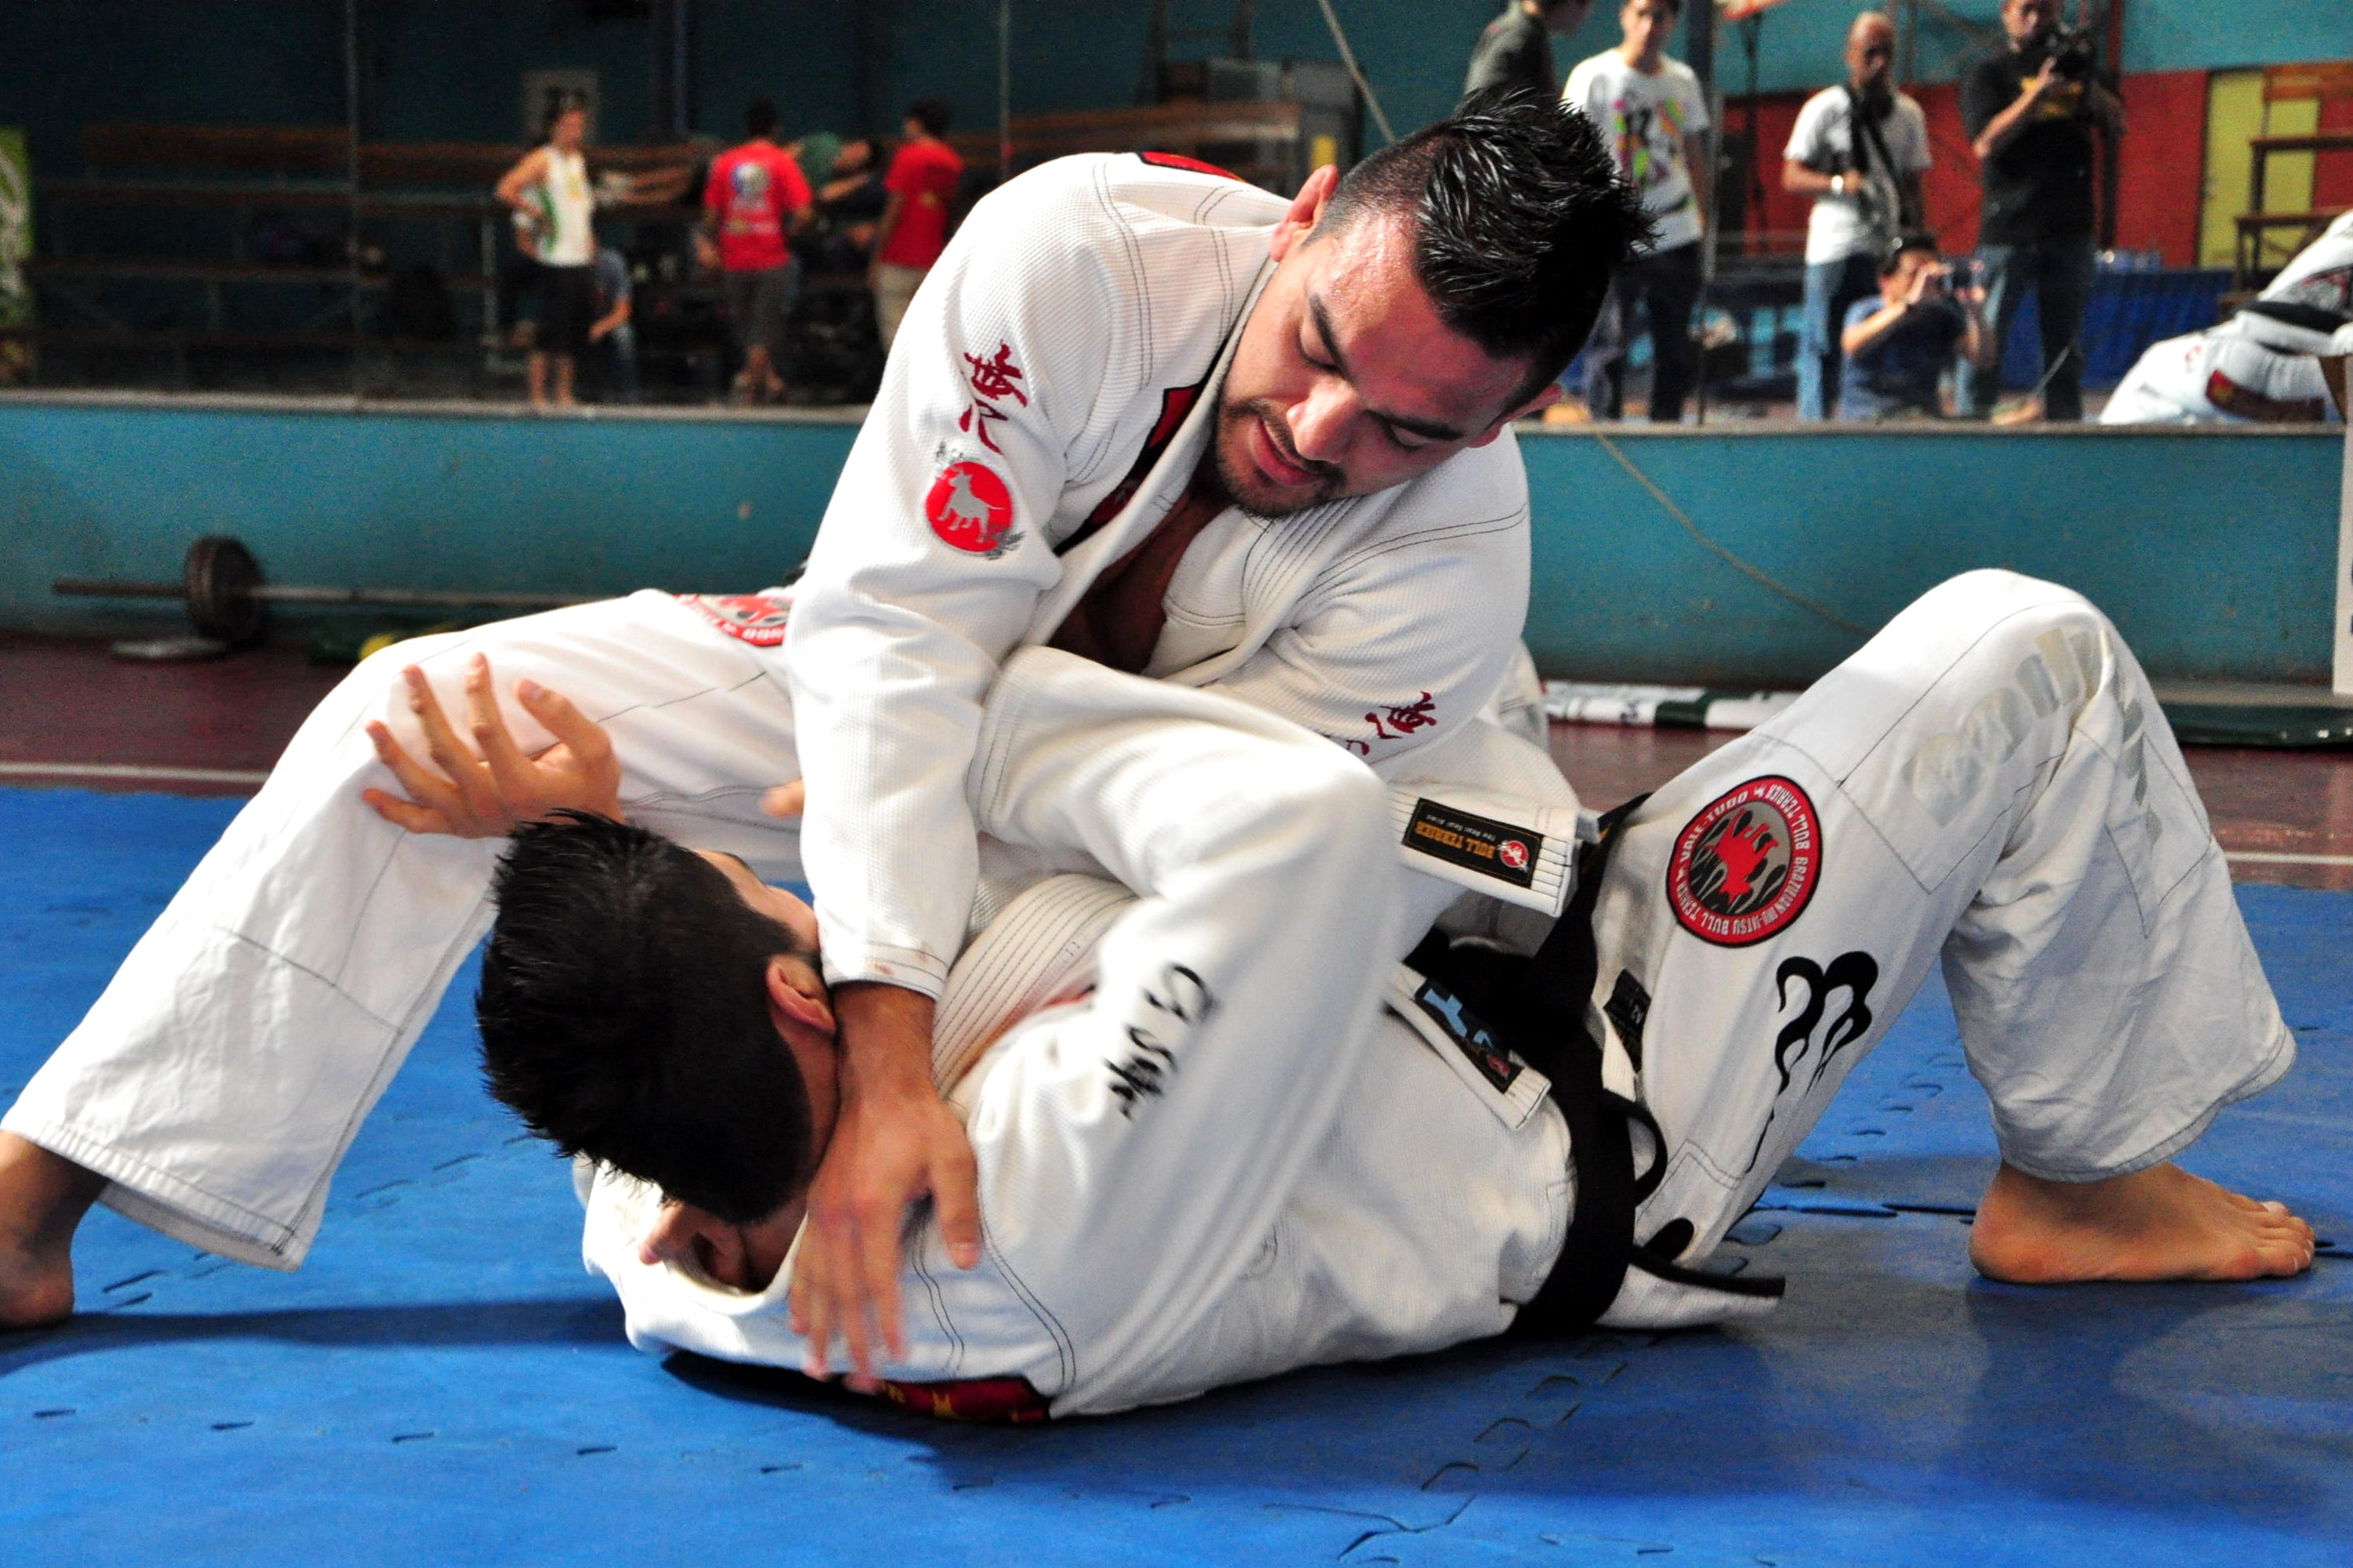 Brazilian jiujitsu champs demonstrate moves, trainers share wisdom